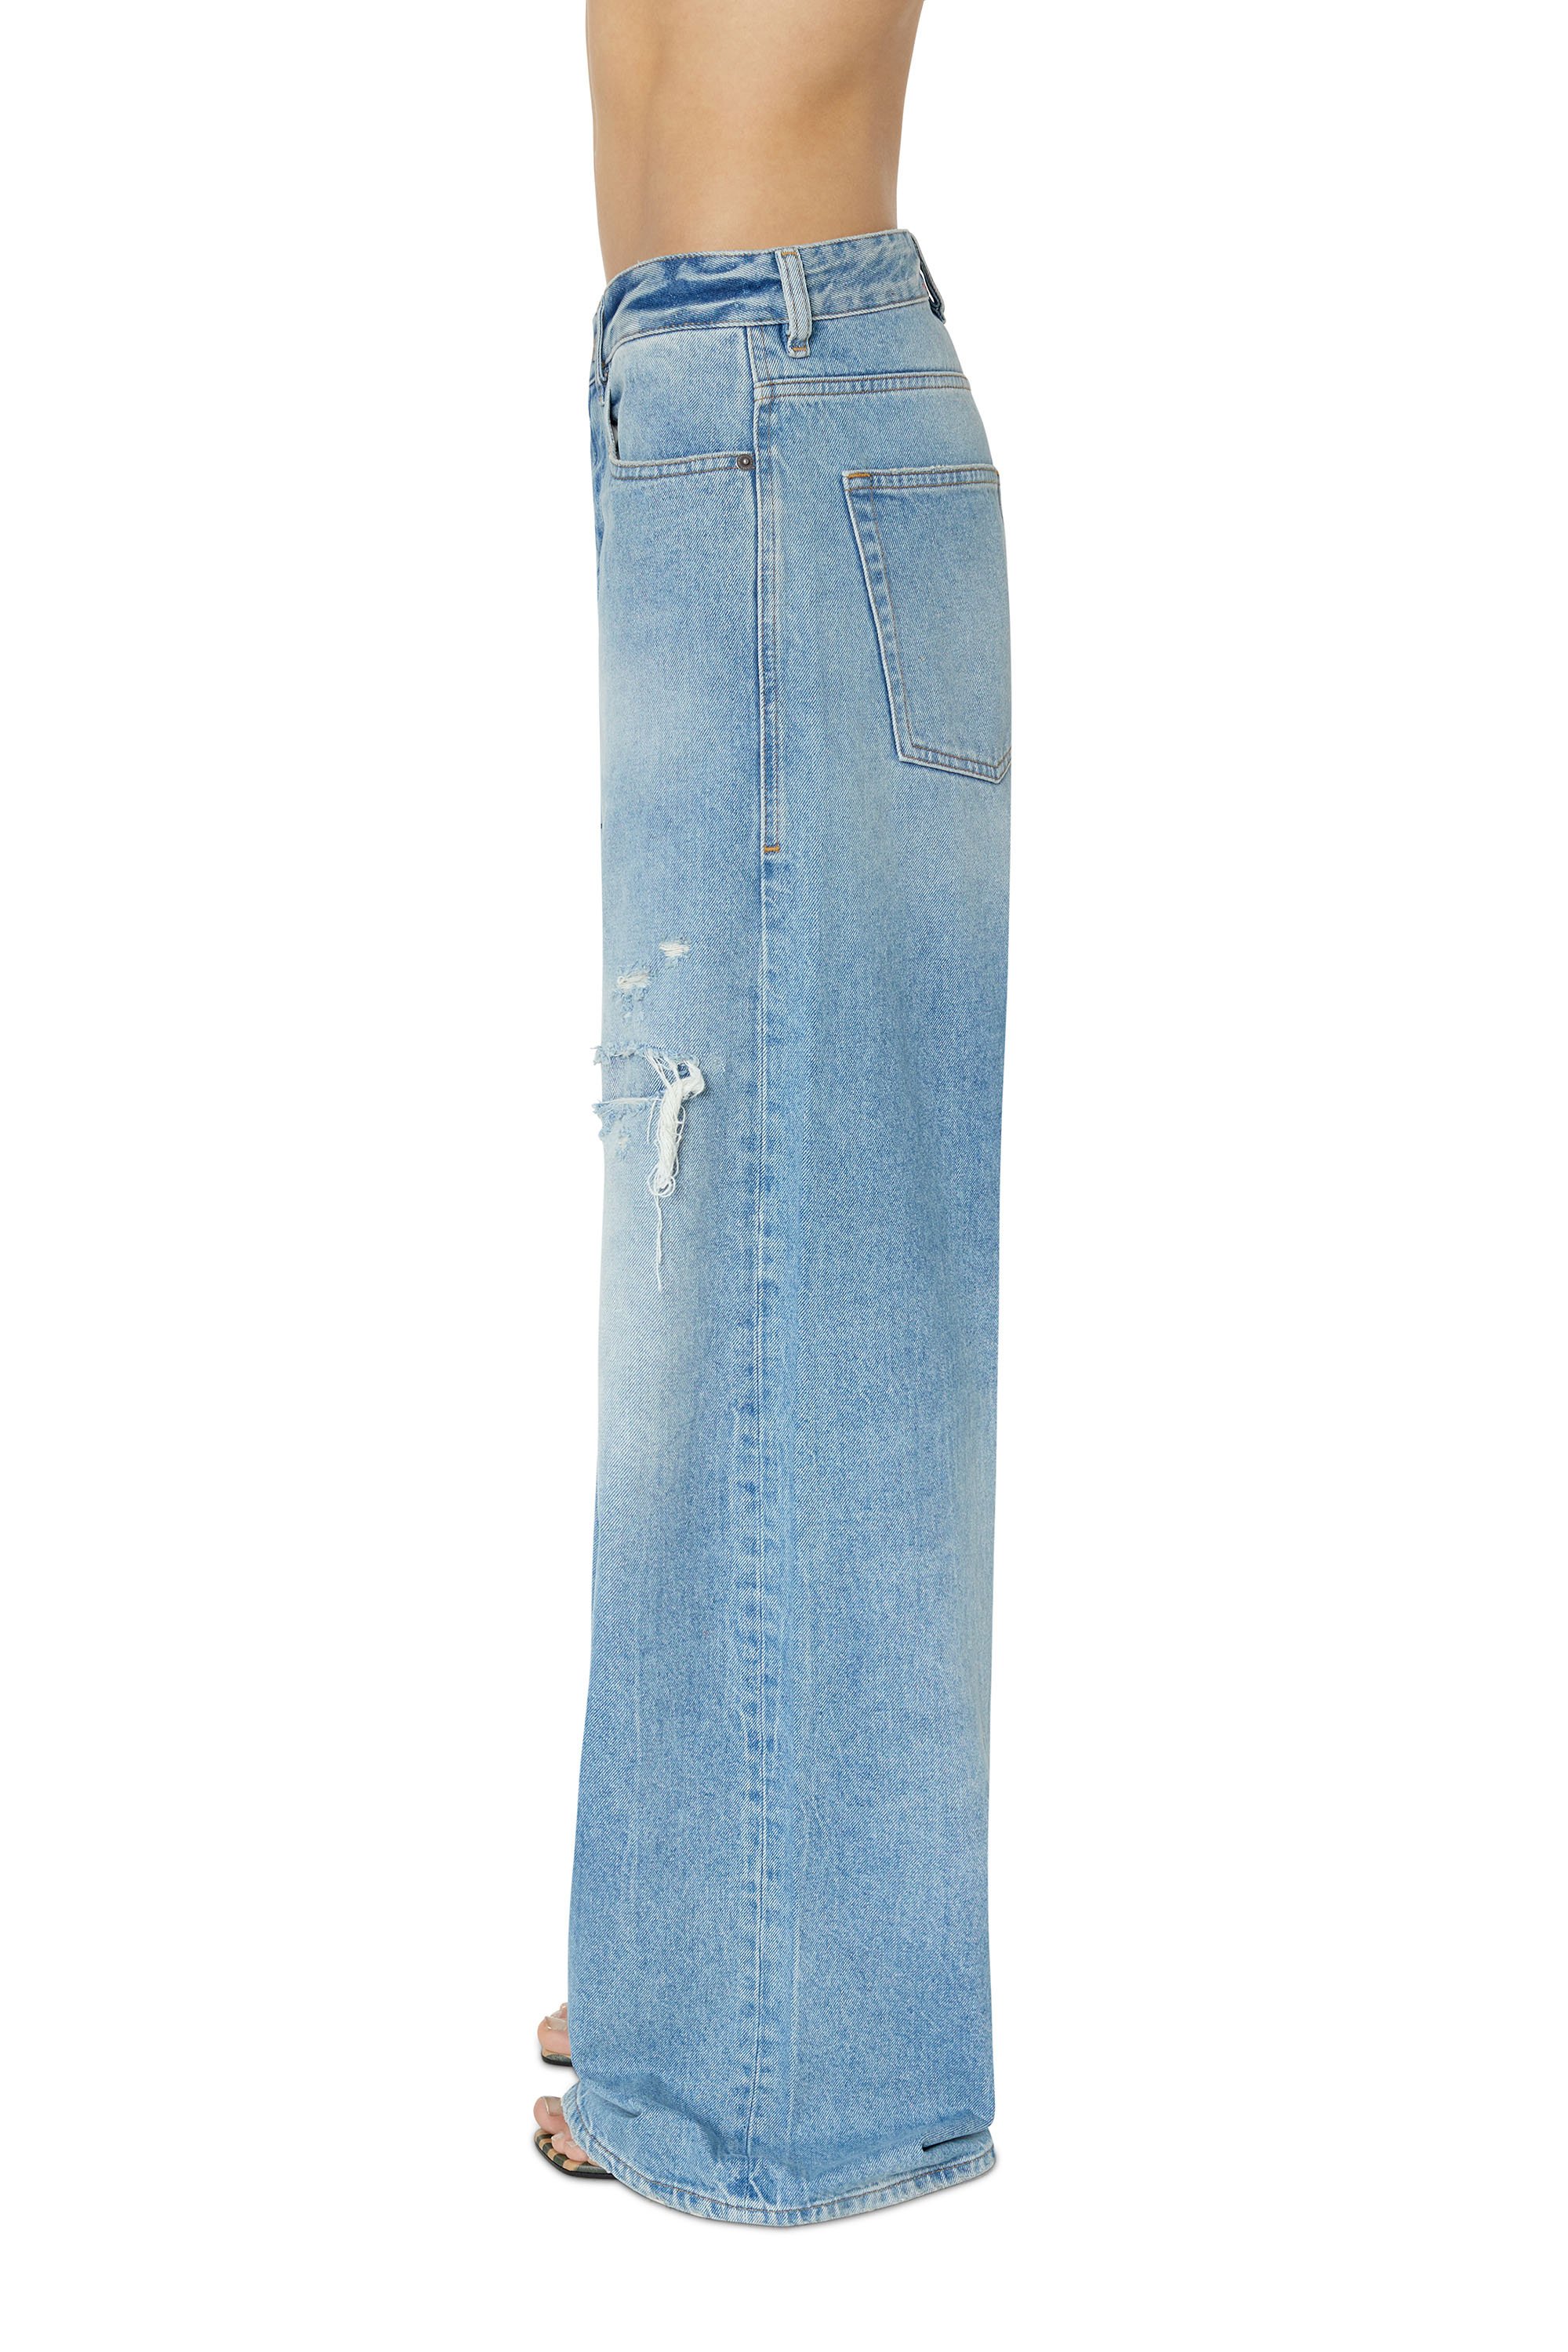 Rabatt 94 % Lefties Straight jeans DAMEN Jeans Straight jeans Destroyed Blau 28 